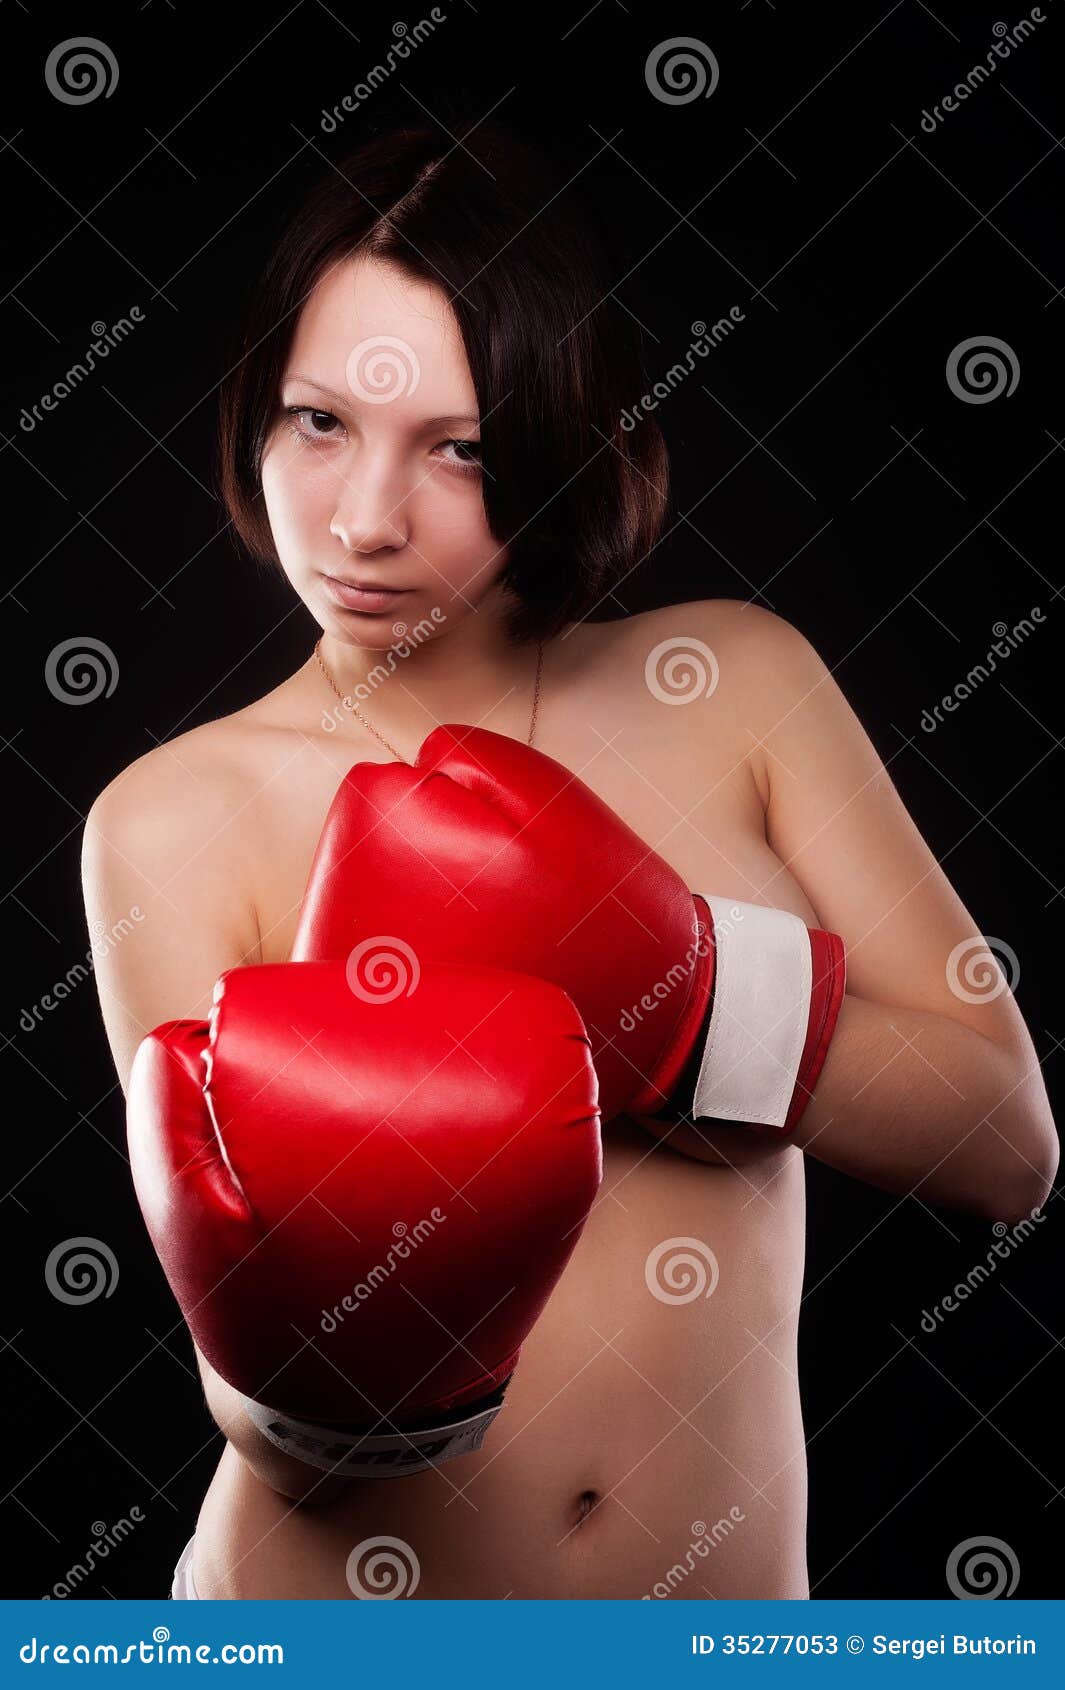 Female boxers nude